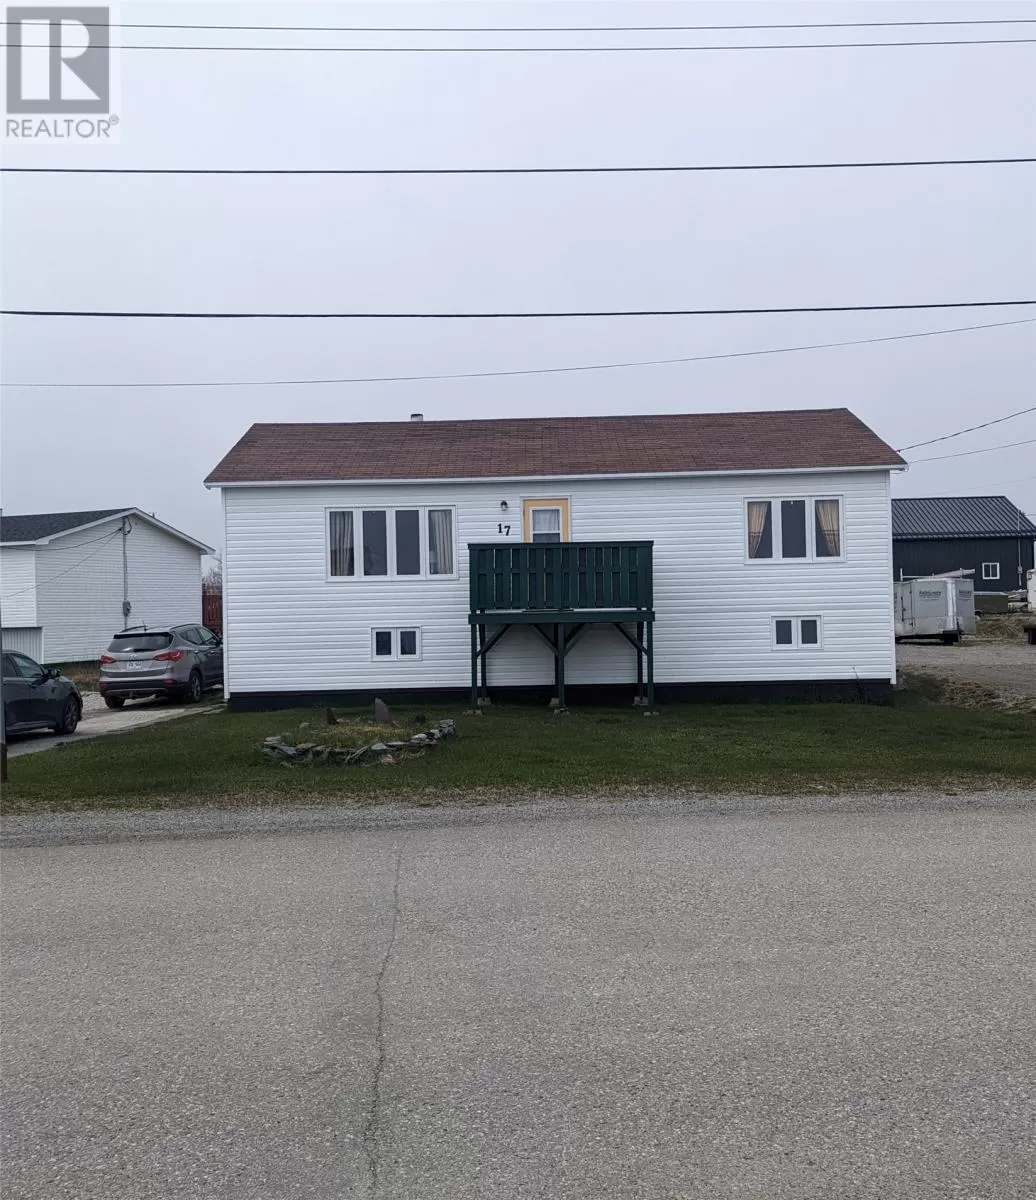 House for rent: 17 Marine Drive, Musgrave Harbour, Newfoundland & Labrador A0G 3J0